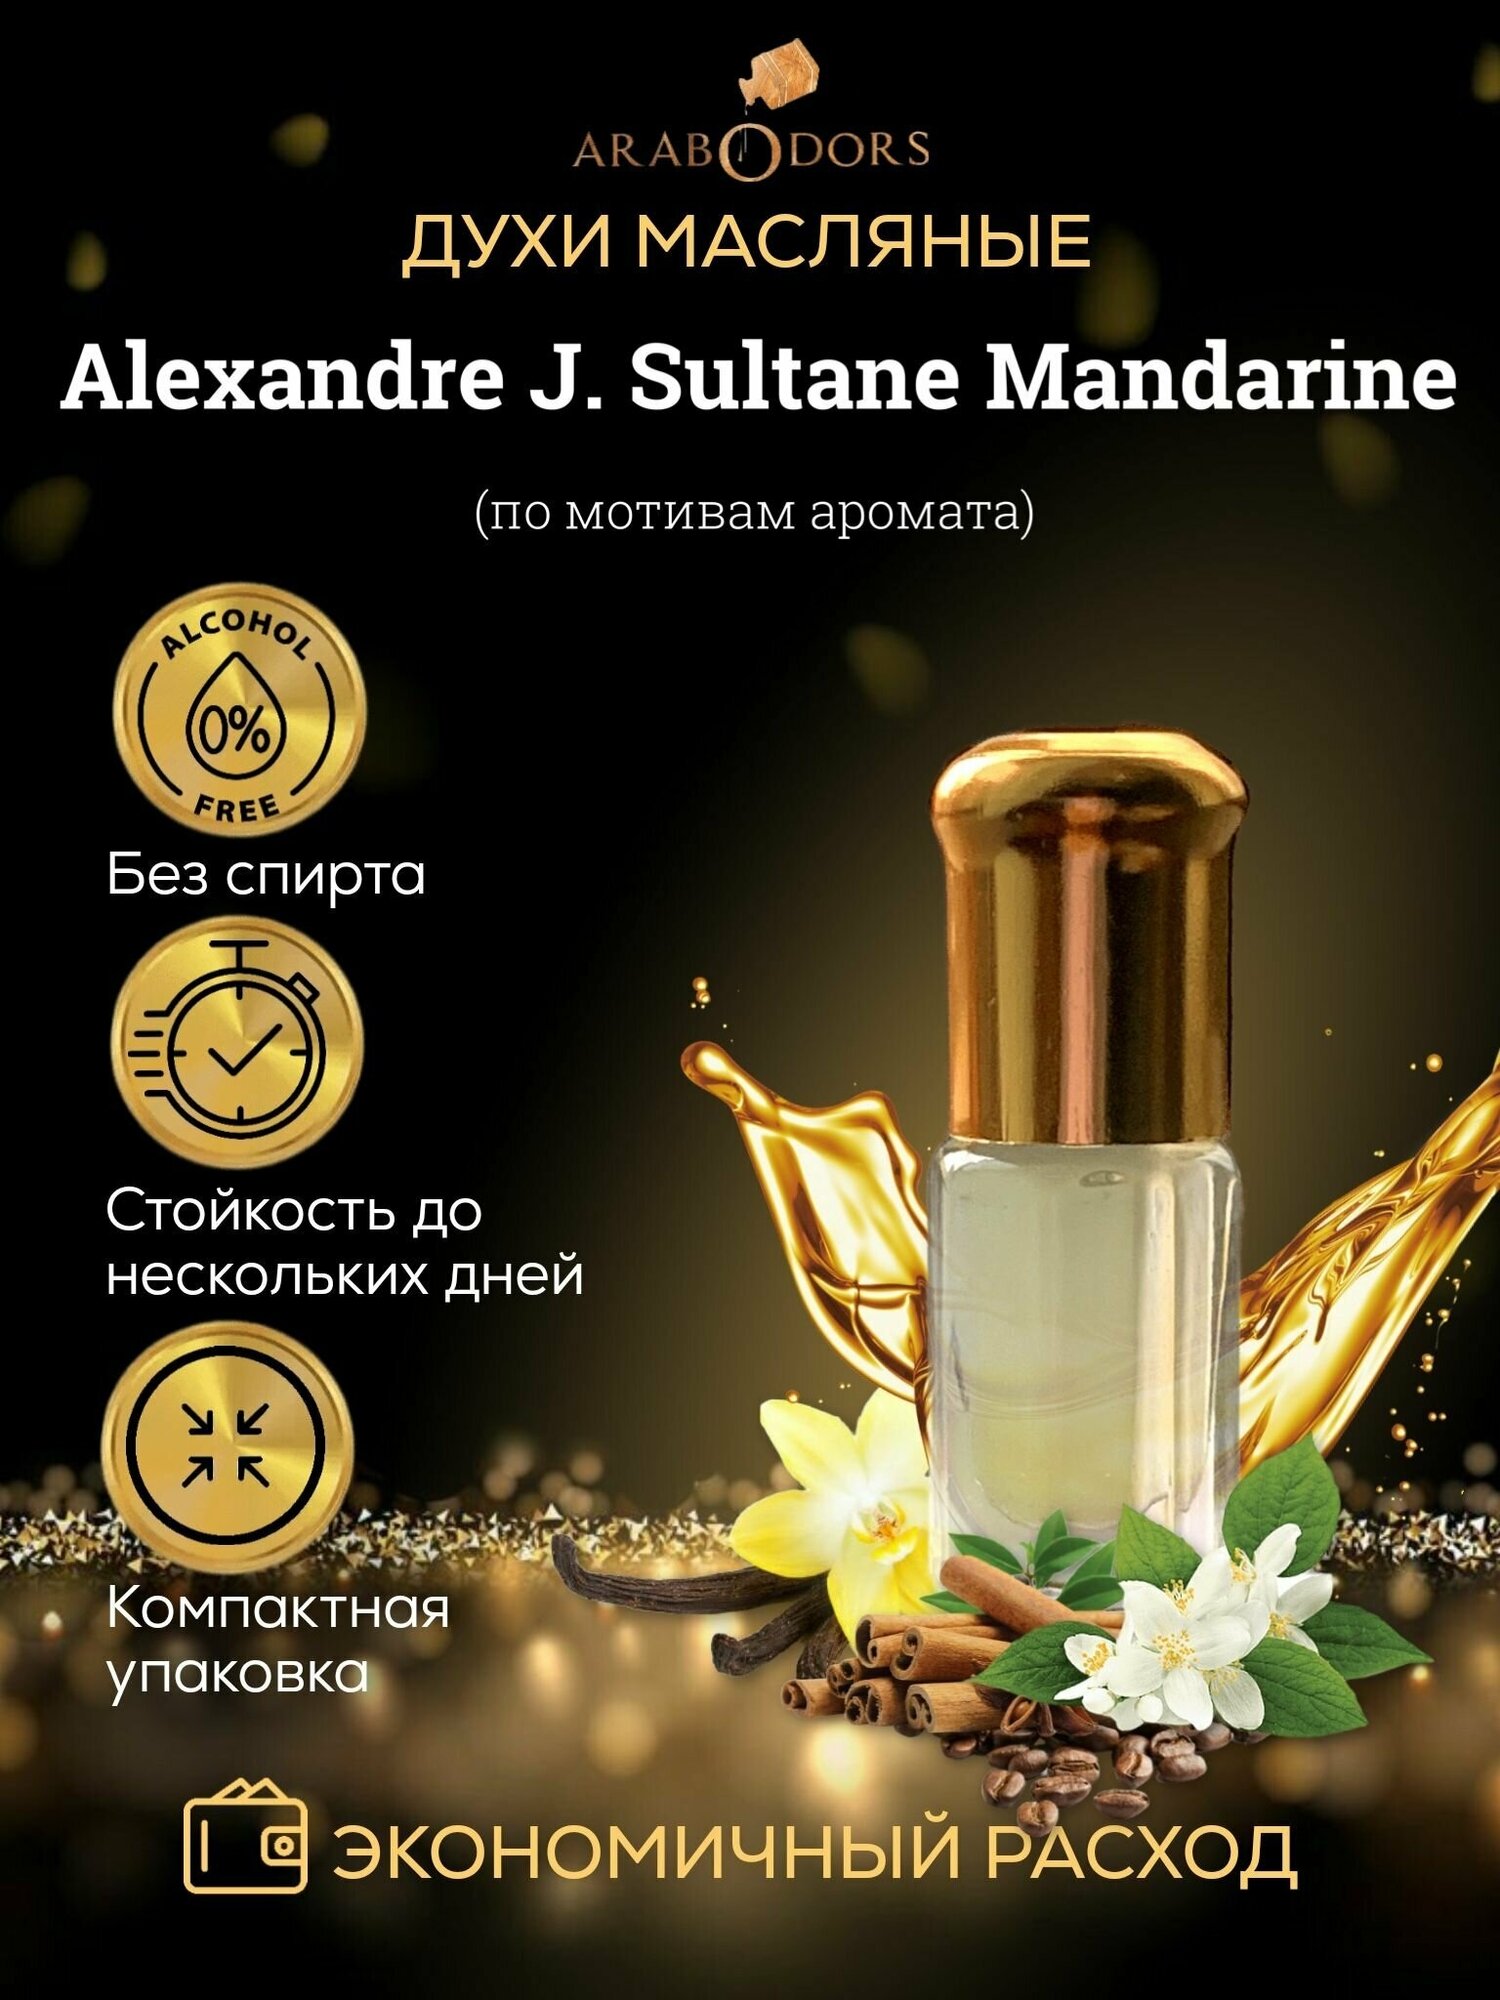 Arab Odors Sultane Mandarine Султан Мандарин масляные духи без спирта 3 мл